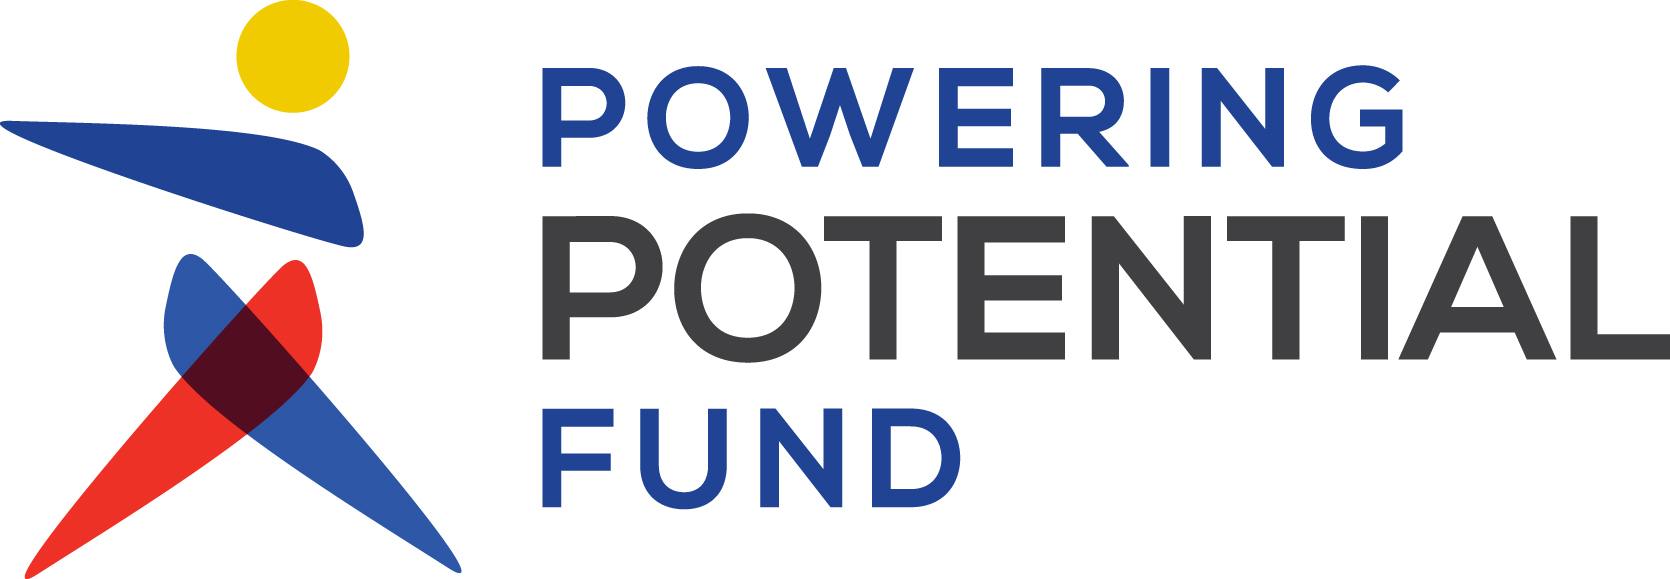 Powering Potential Fund logo